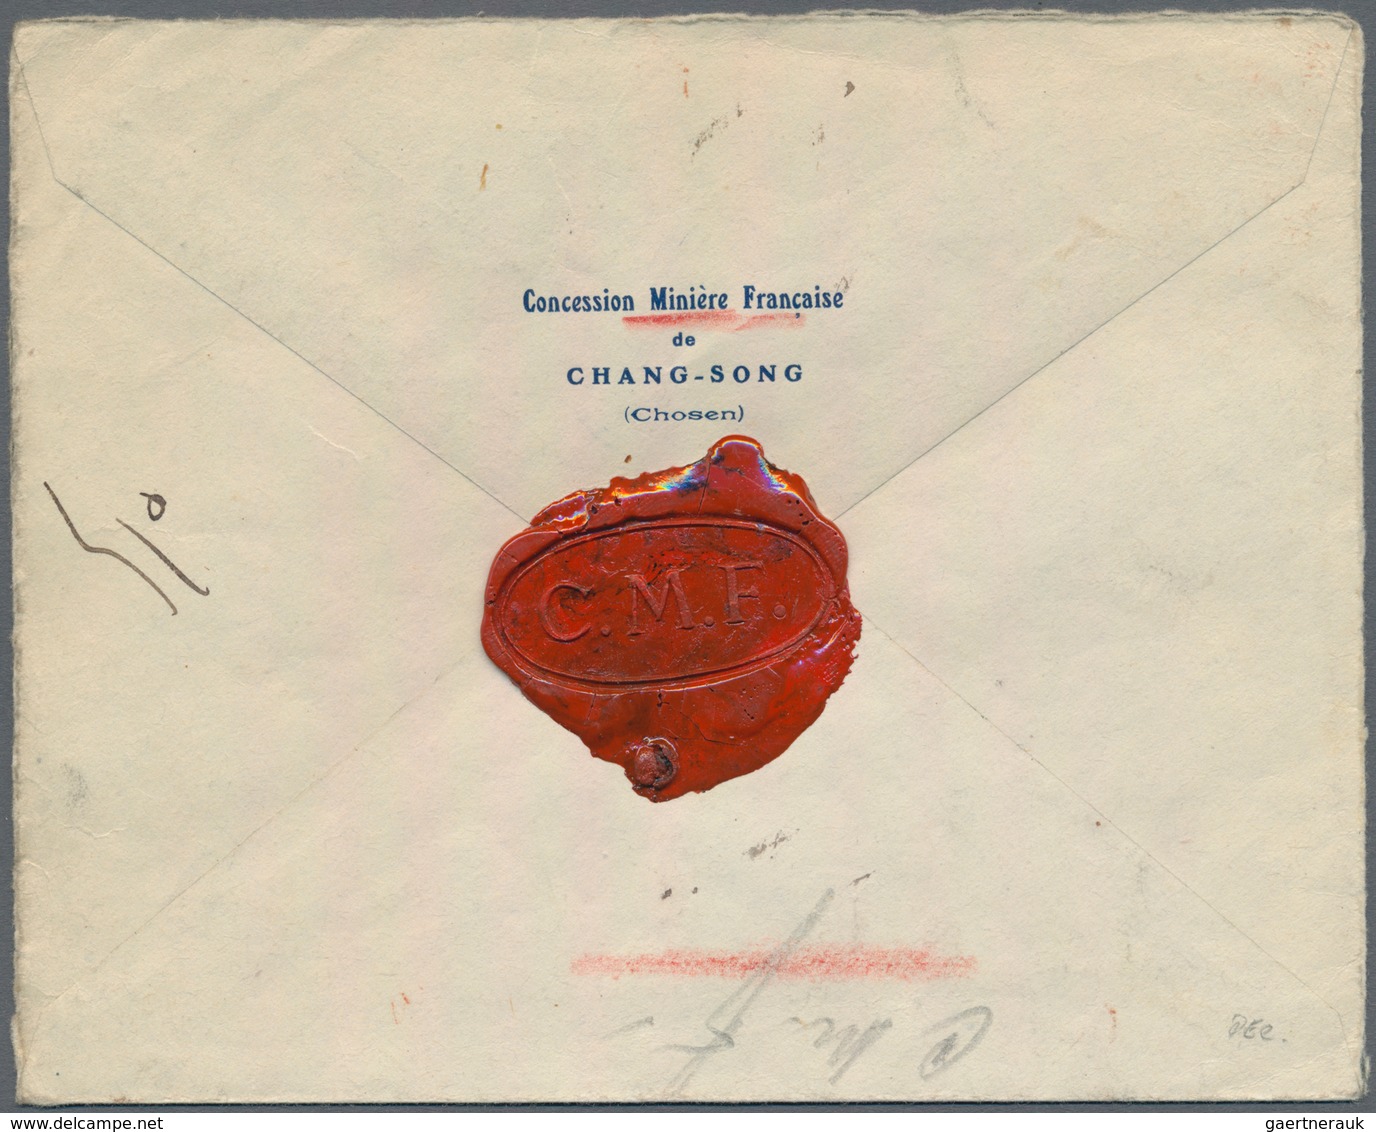 Japanische Post In Korea: 1899, Kiku 20 S. Canc. Korea Type "Daelanok 3.5.2" (May 2, 1914) To Regist - Military Service Stamps